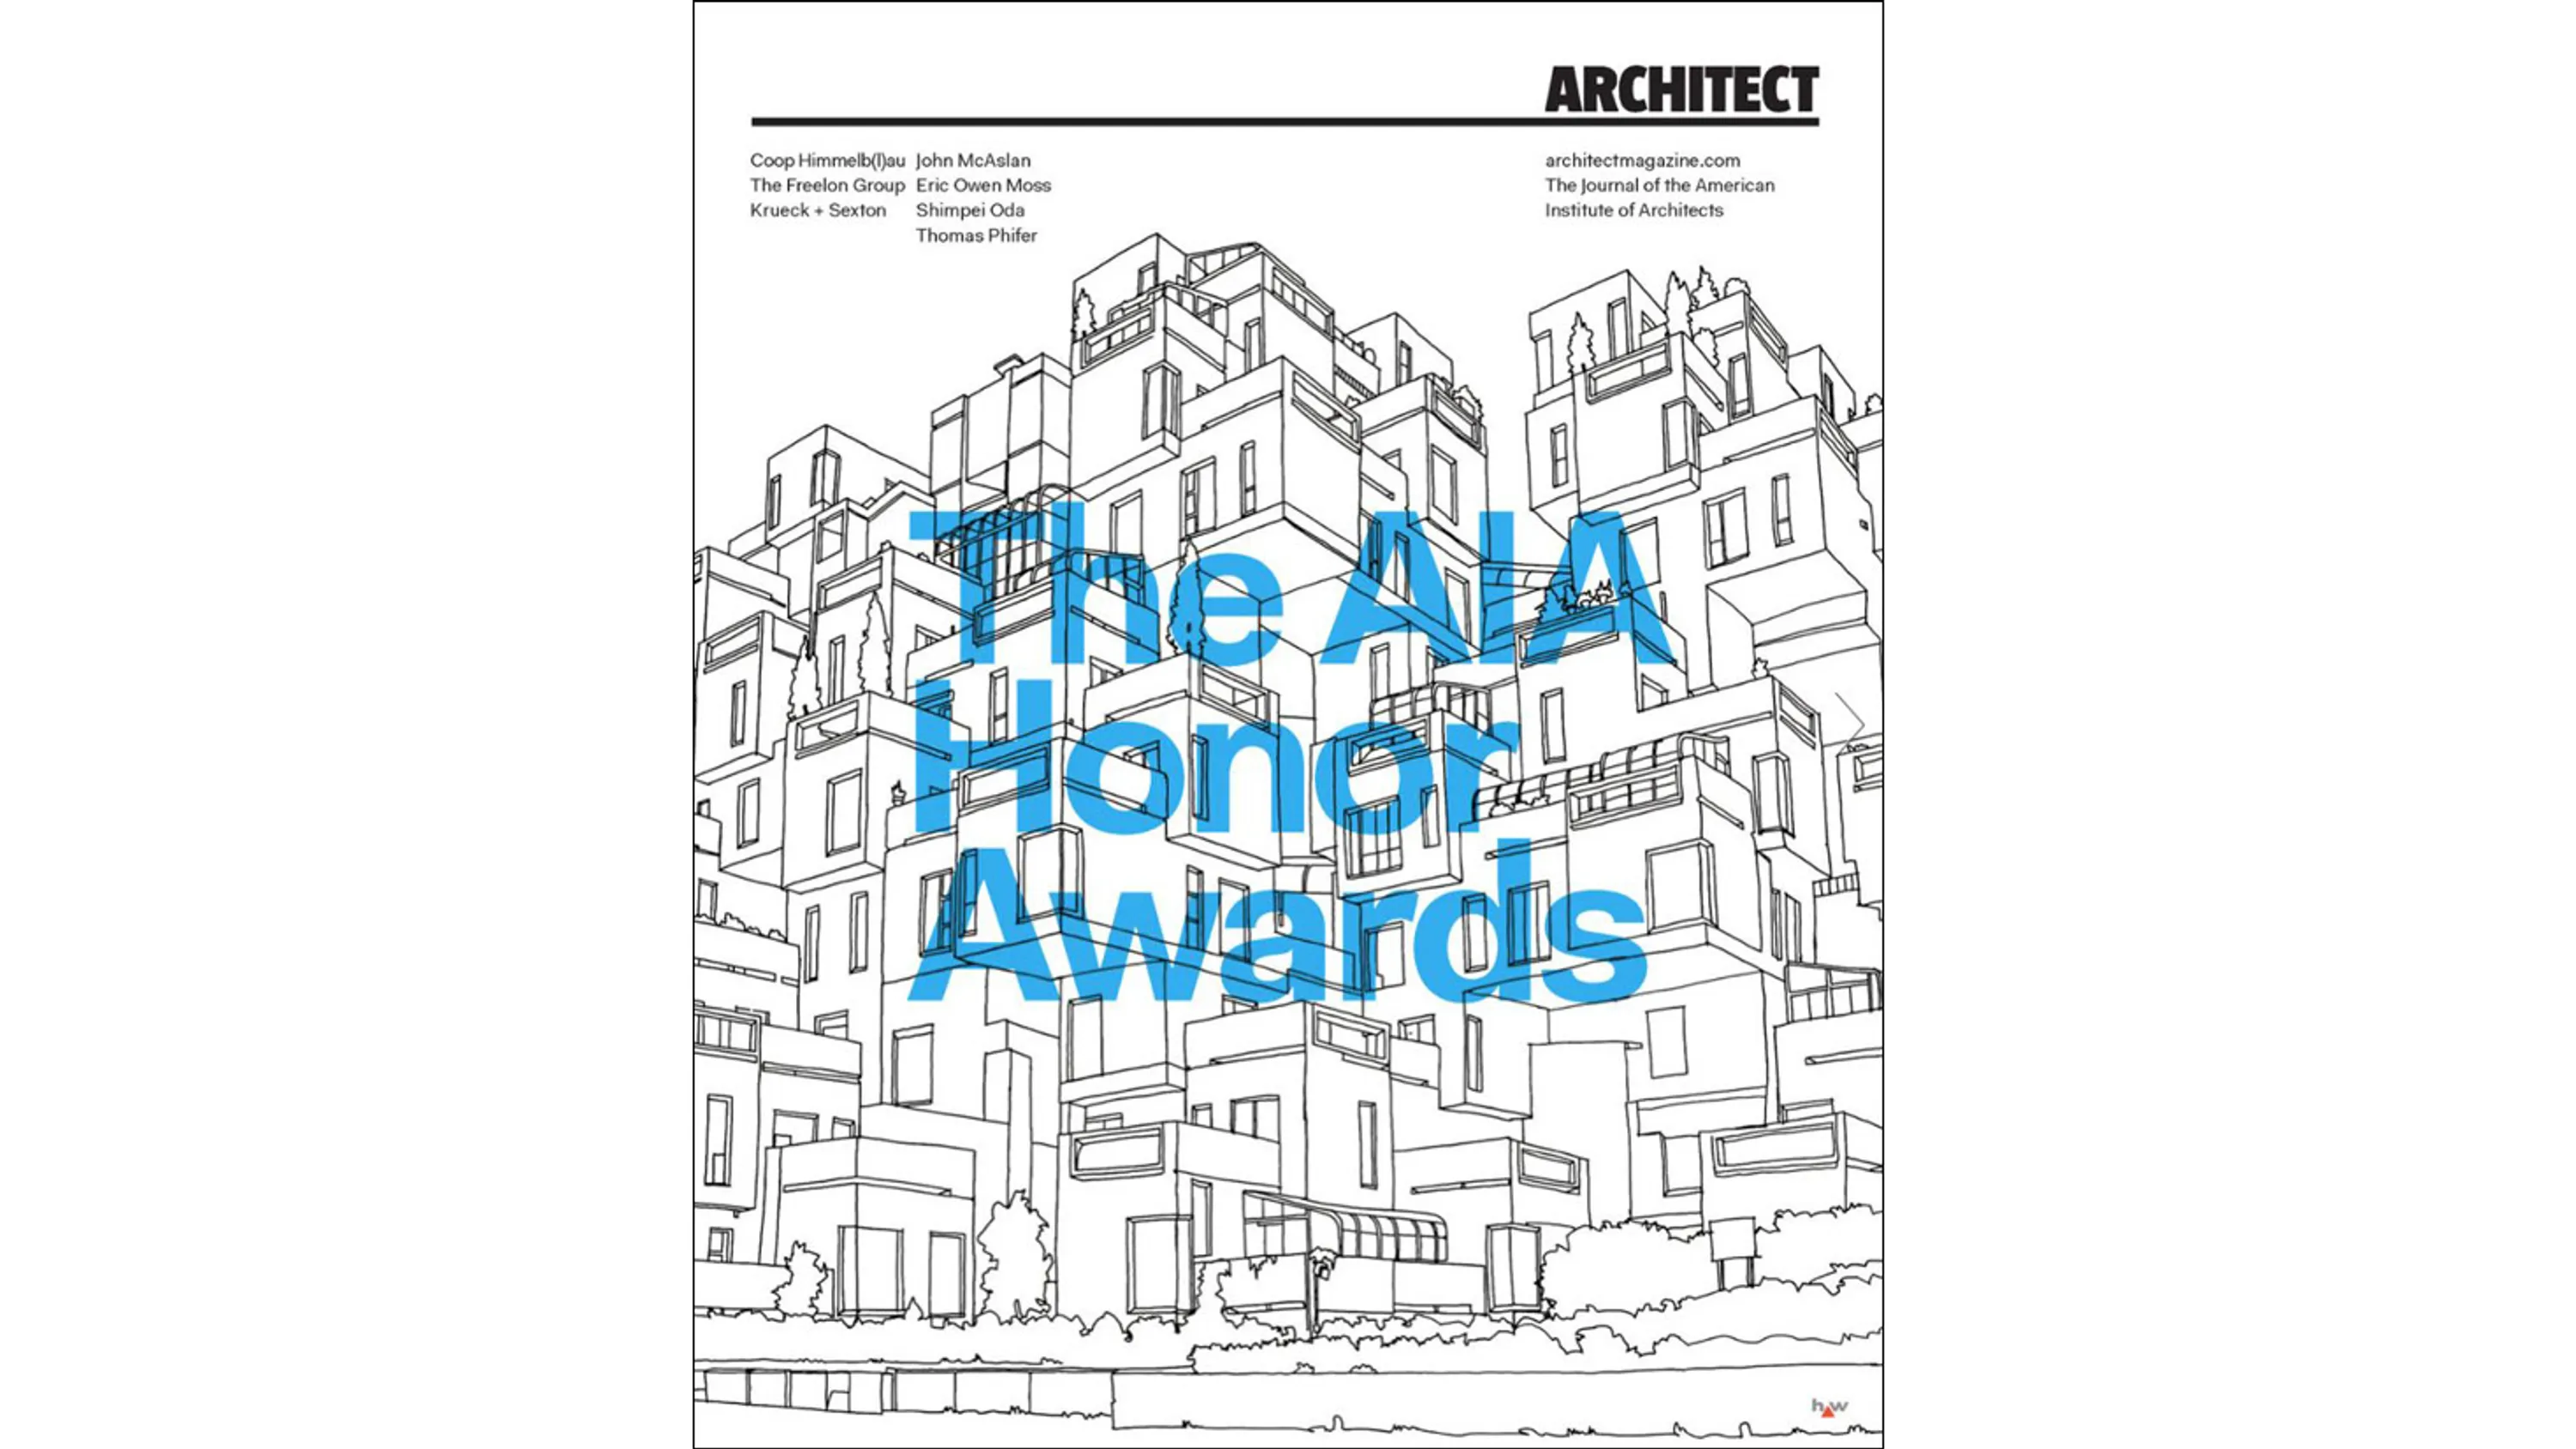 Architect Magazine: Federal Building Thumbnail